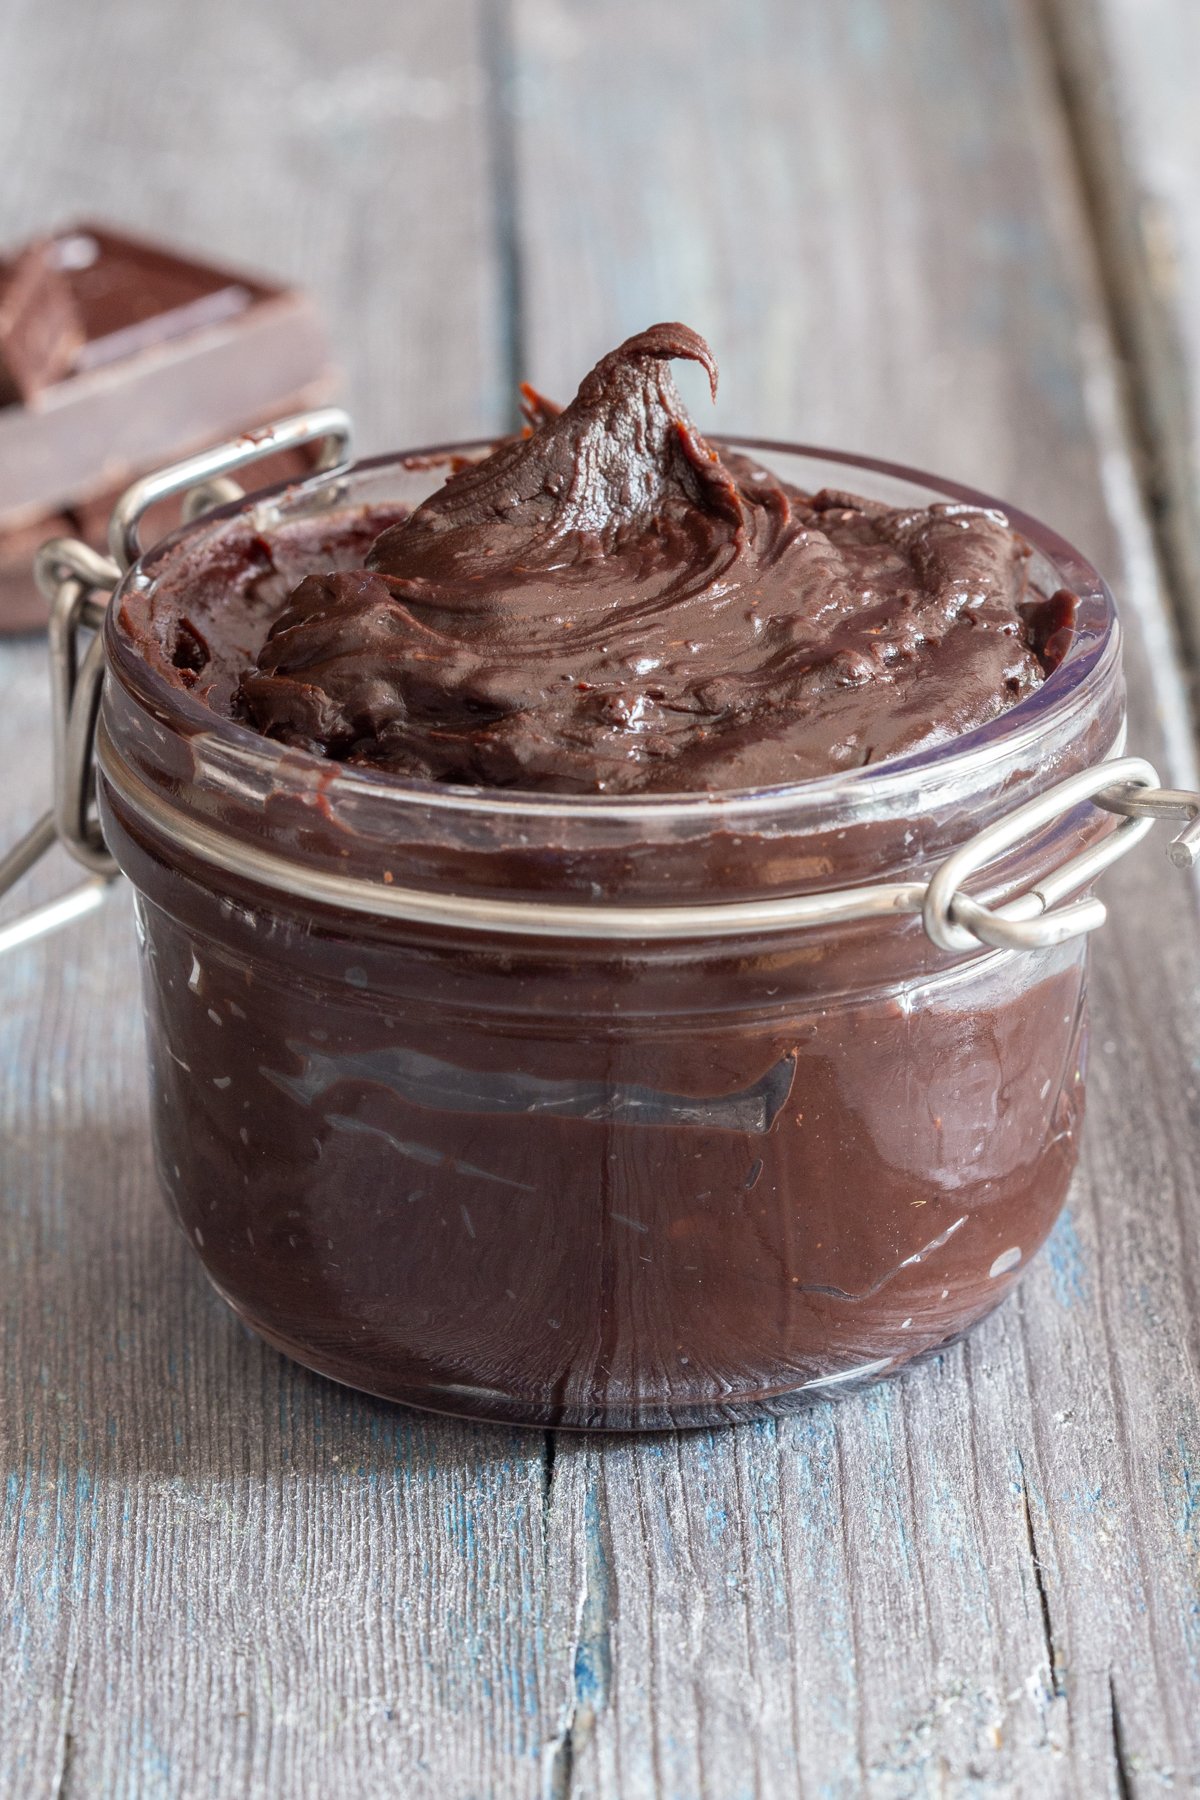 Chocolate cream spread in a glass jar.